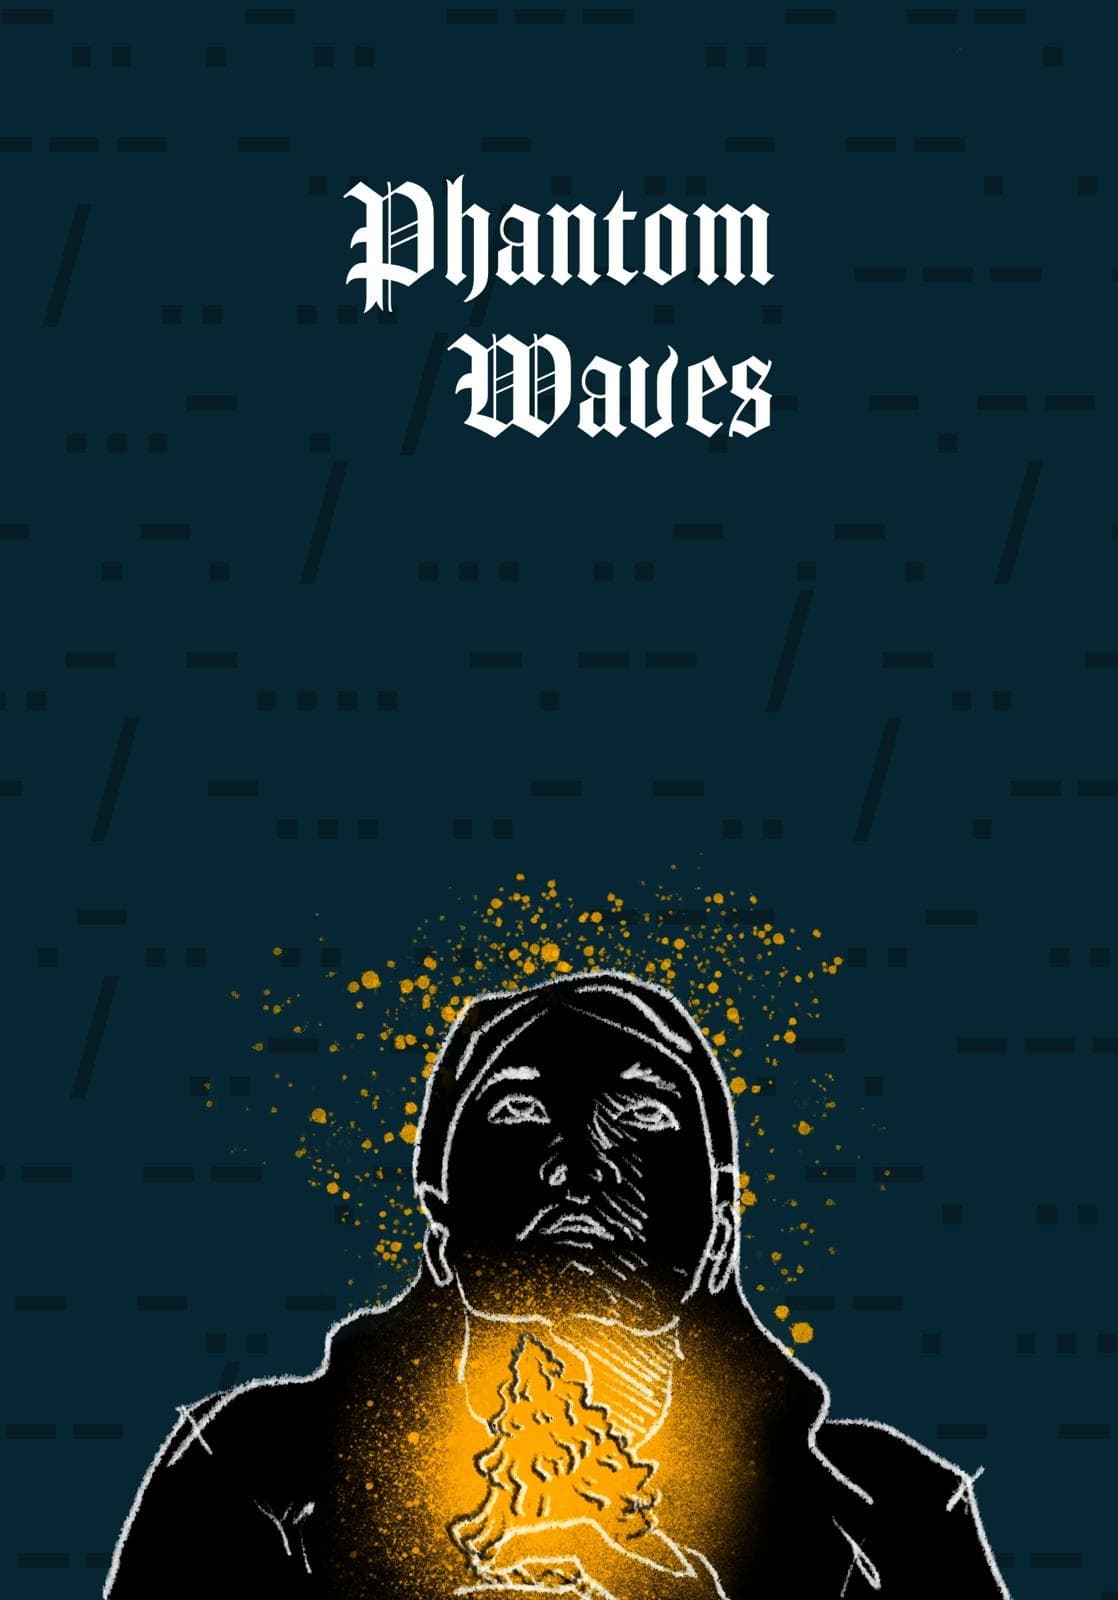 Phantom Waves